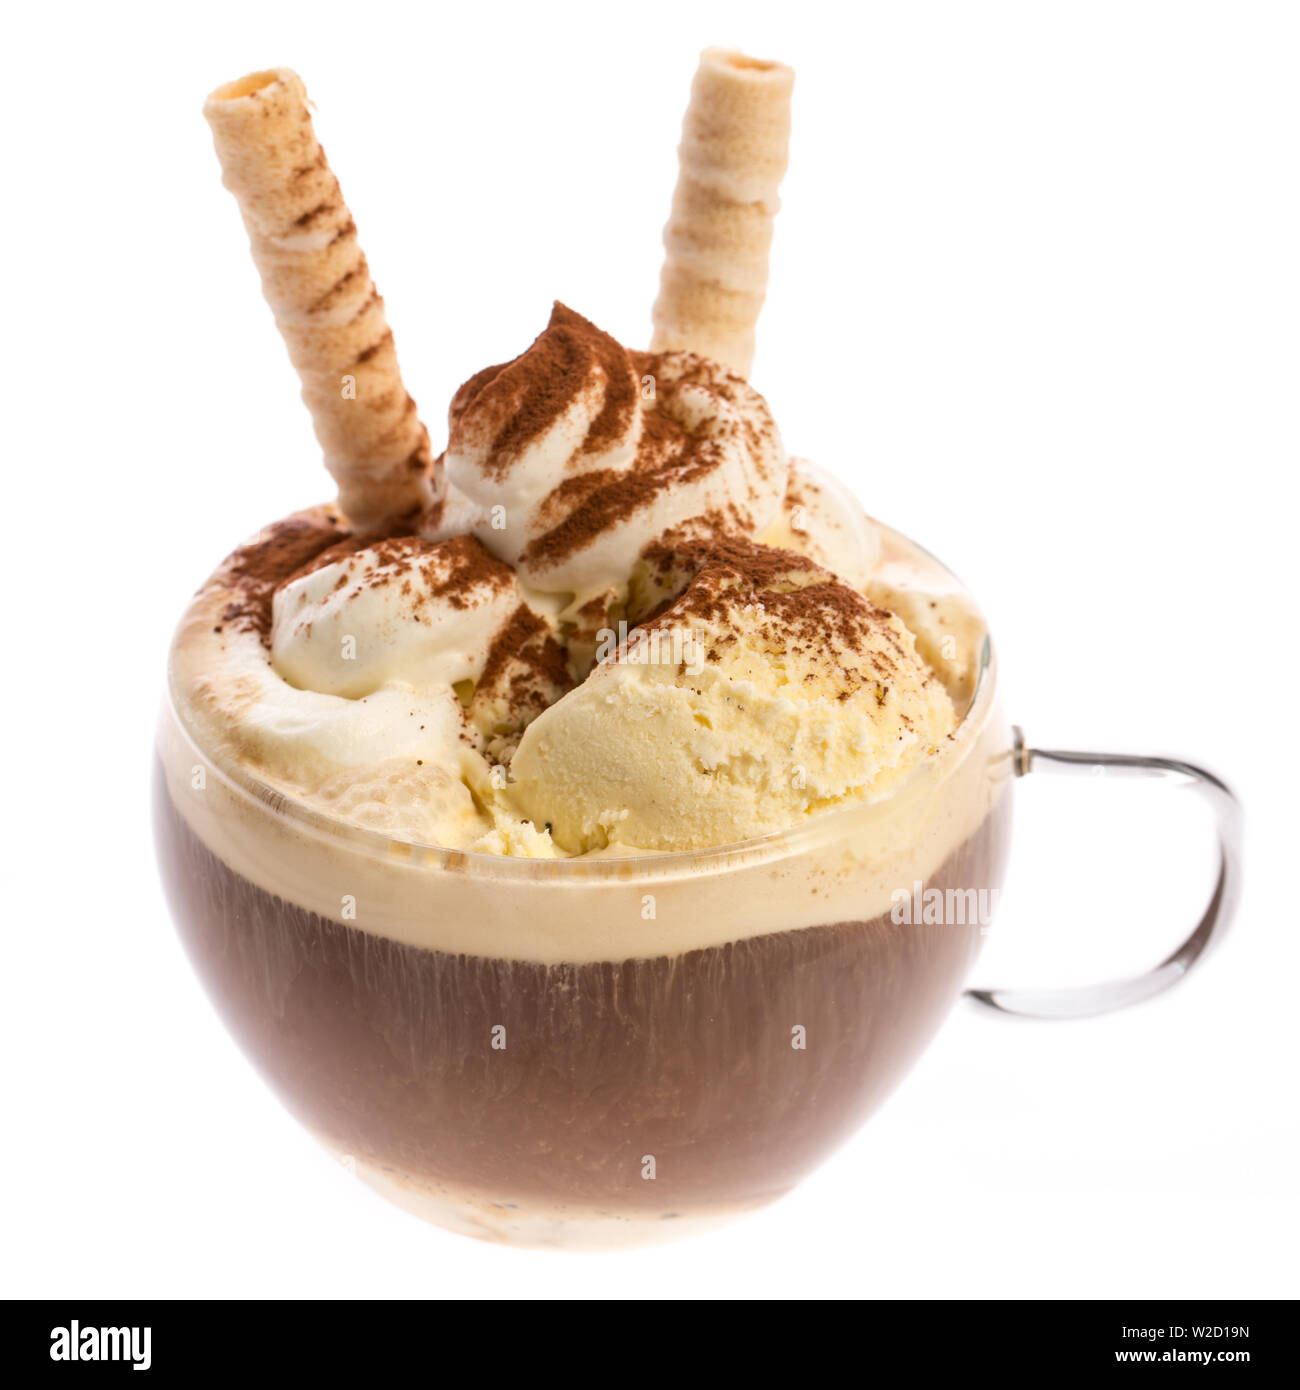 ice cream sundae: Iced Coffee: Hot coffee and ice cream isolated on white background Stock Photo